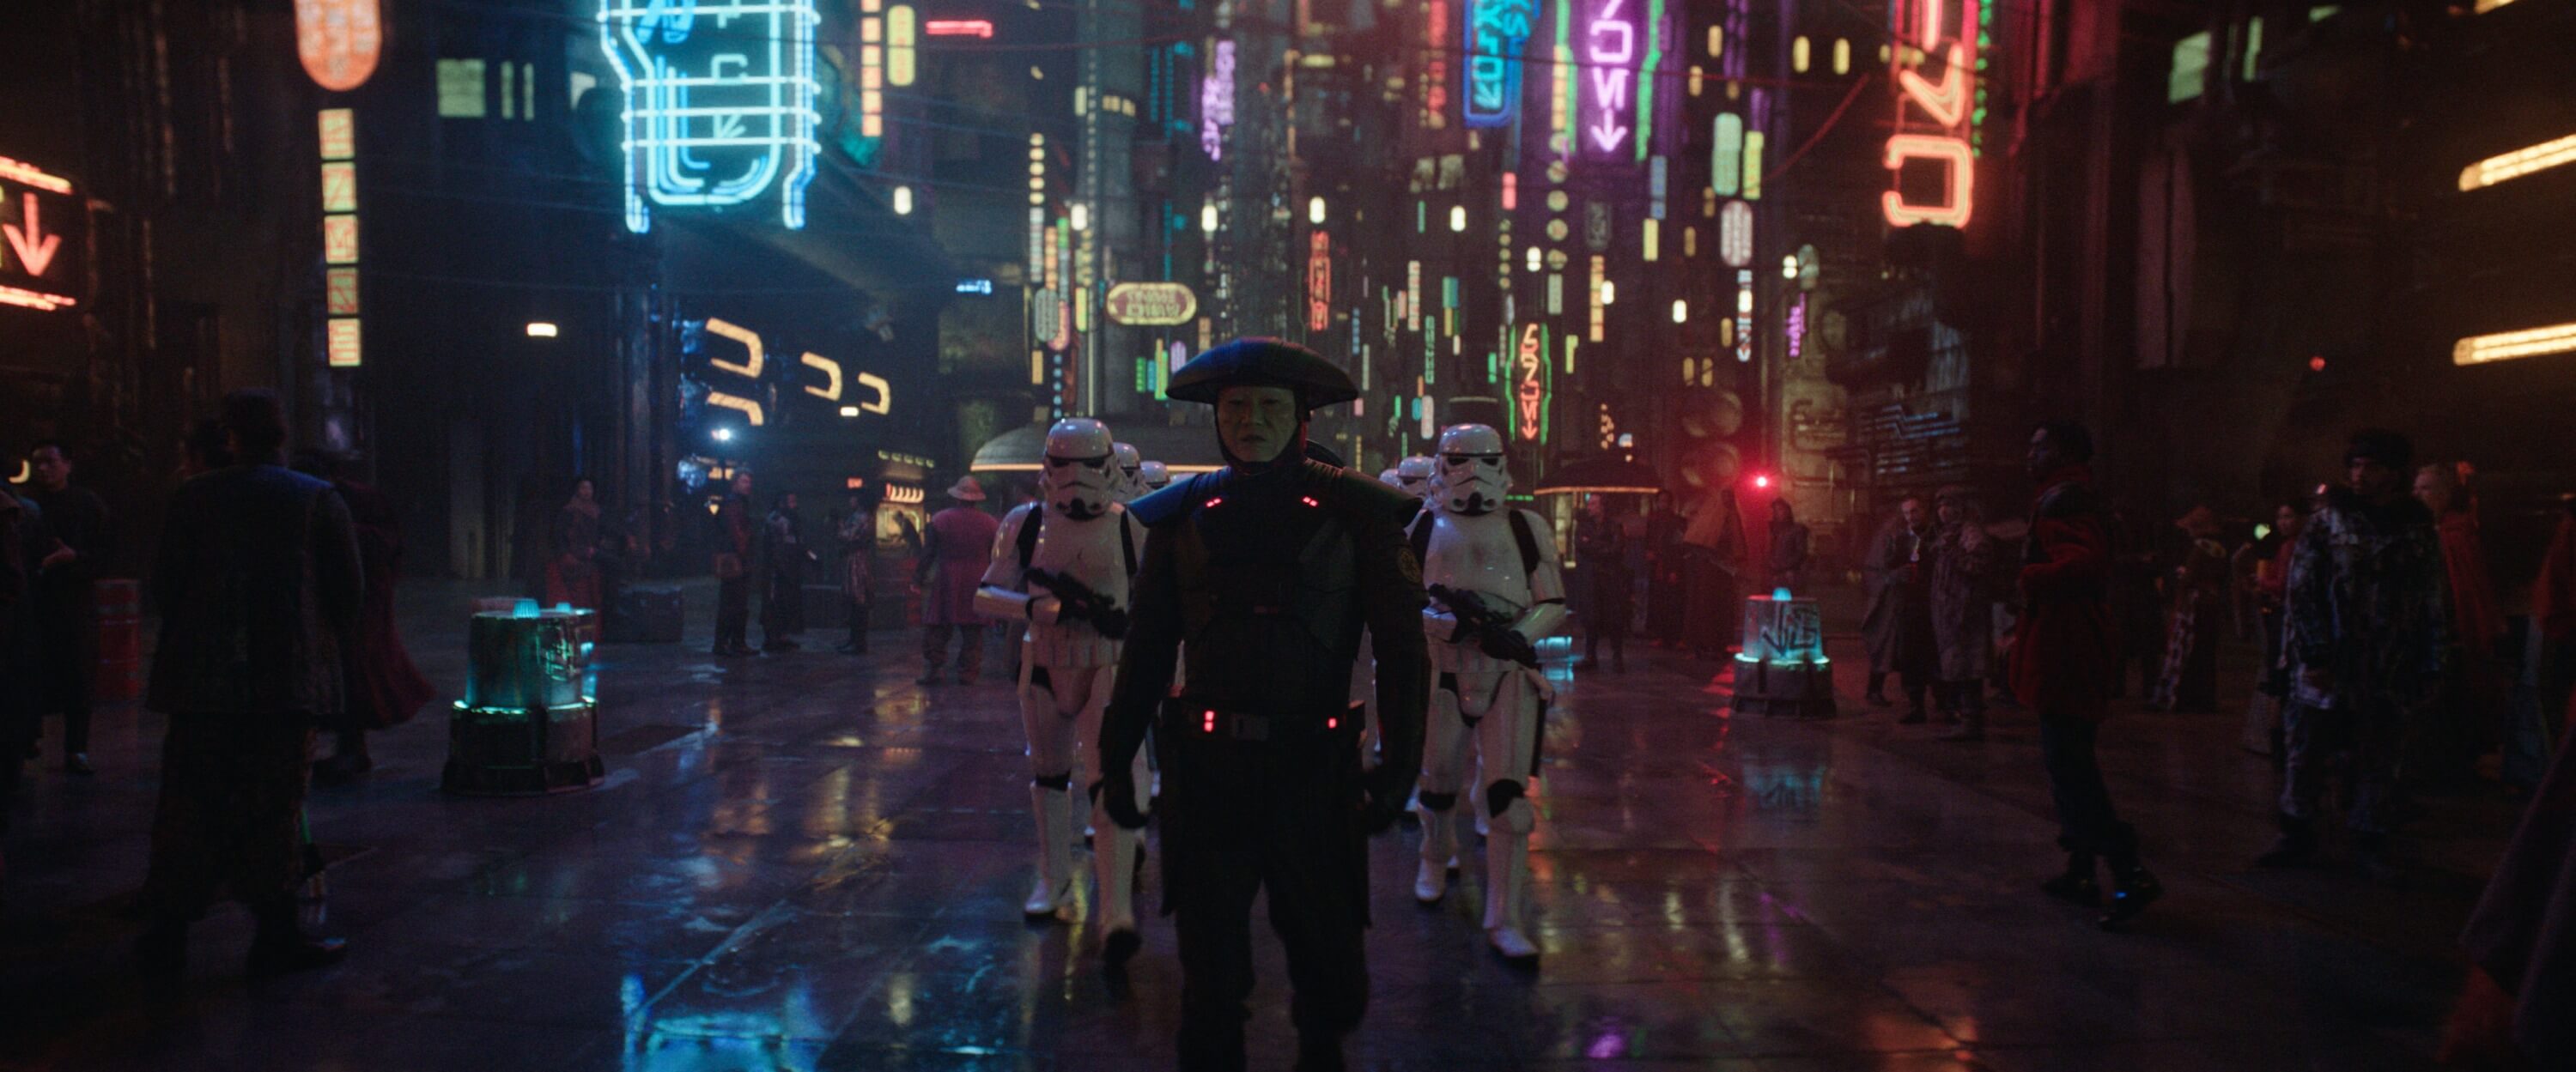 Obi-Wan Kenobi Star Wars series is inspired by westerns and samurai films, says Deborah Chow